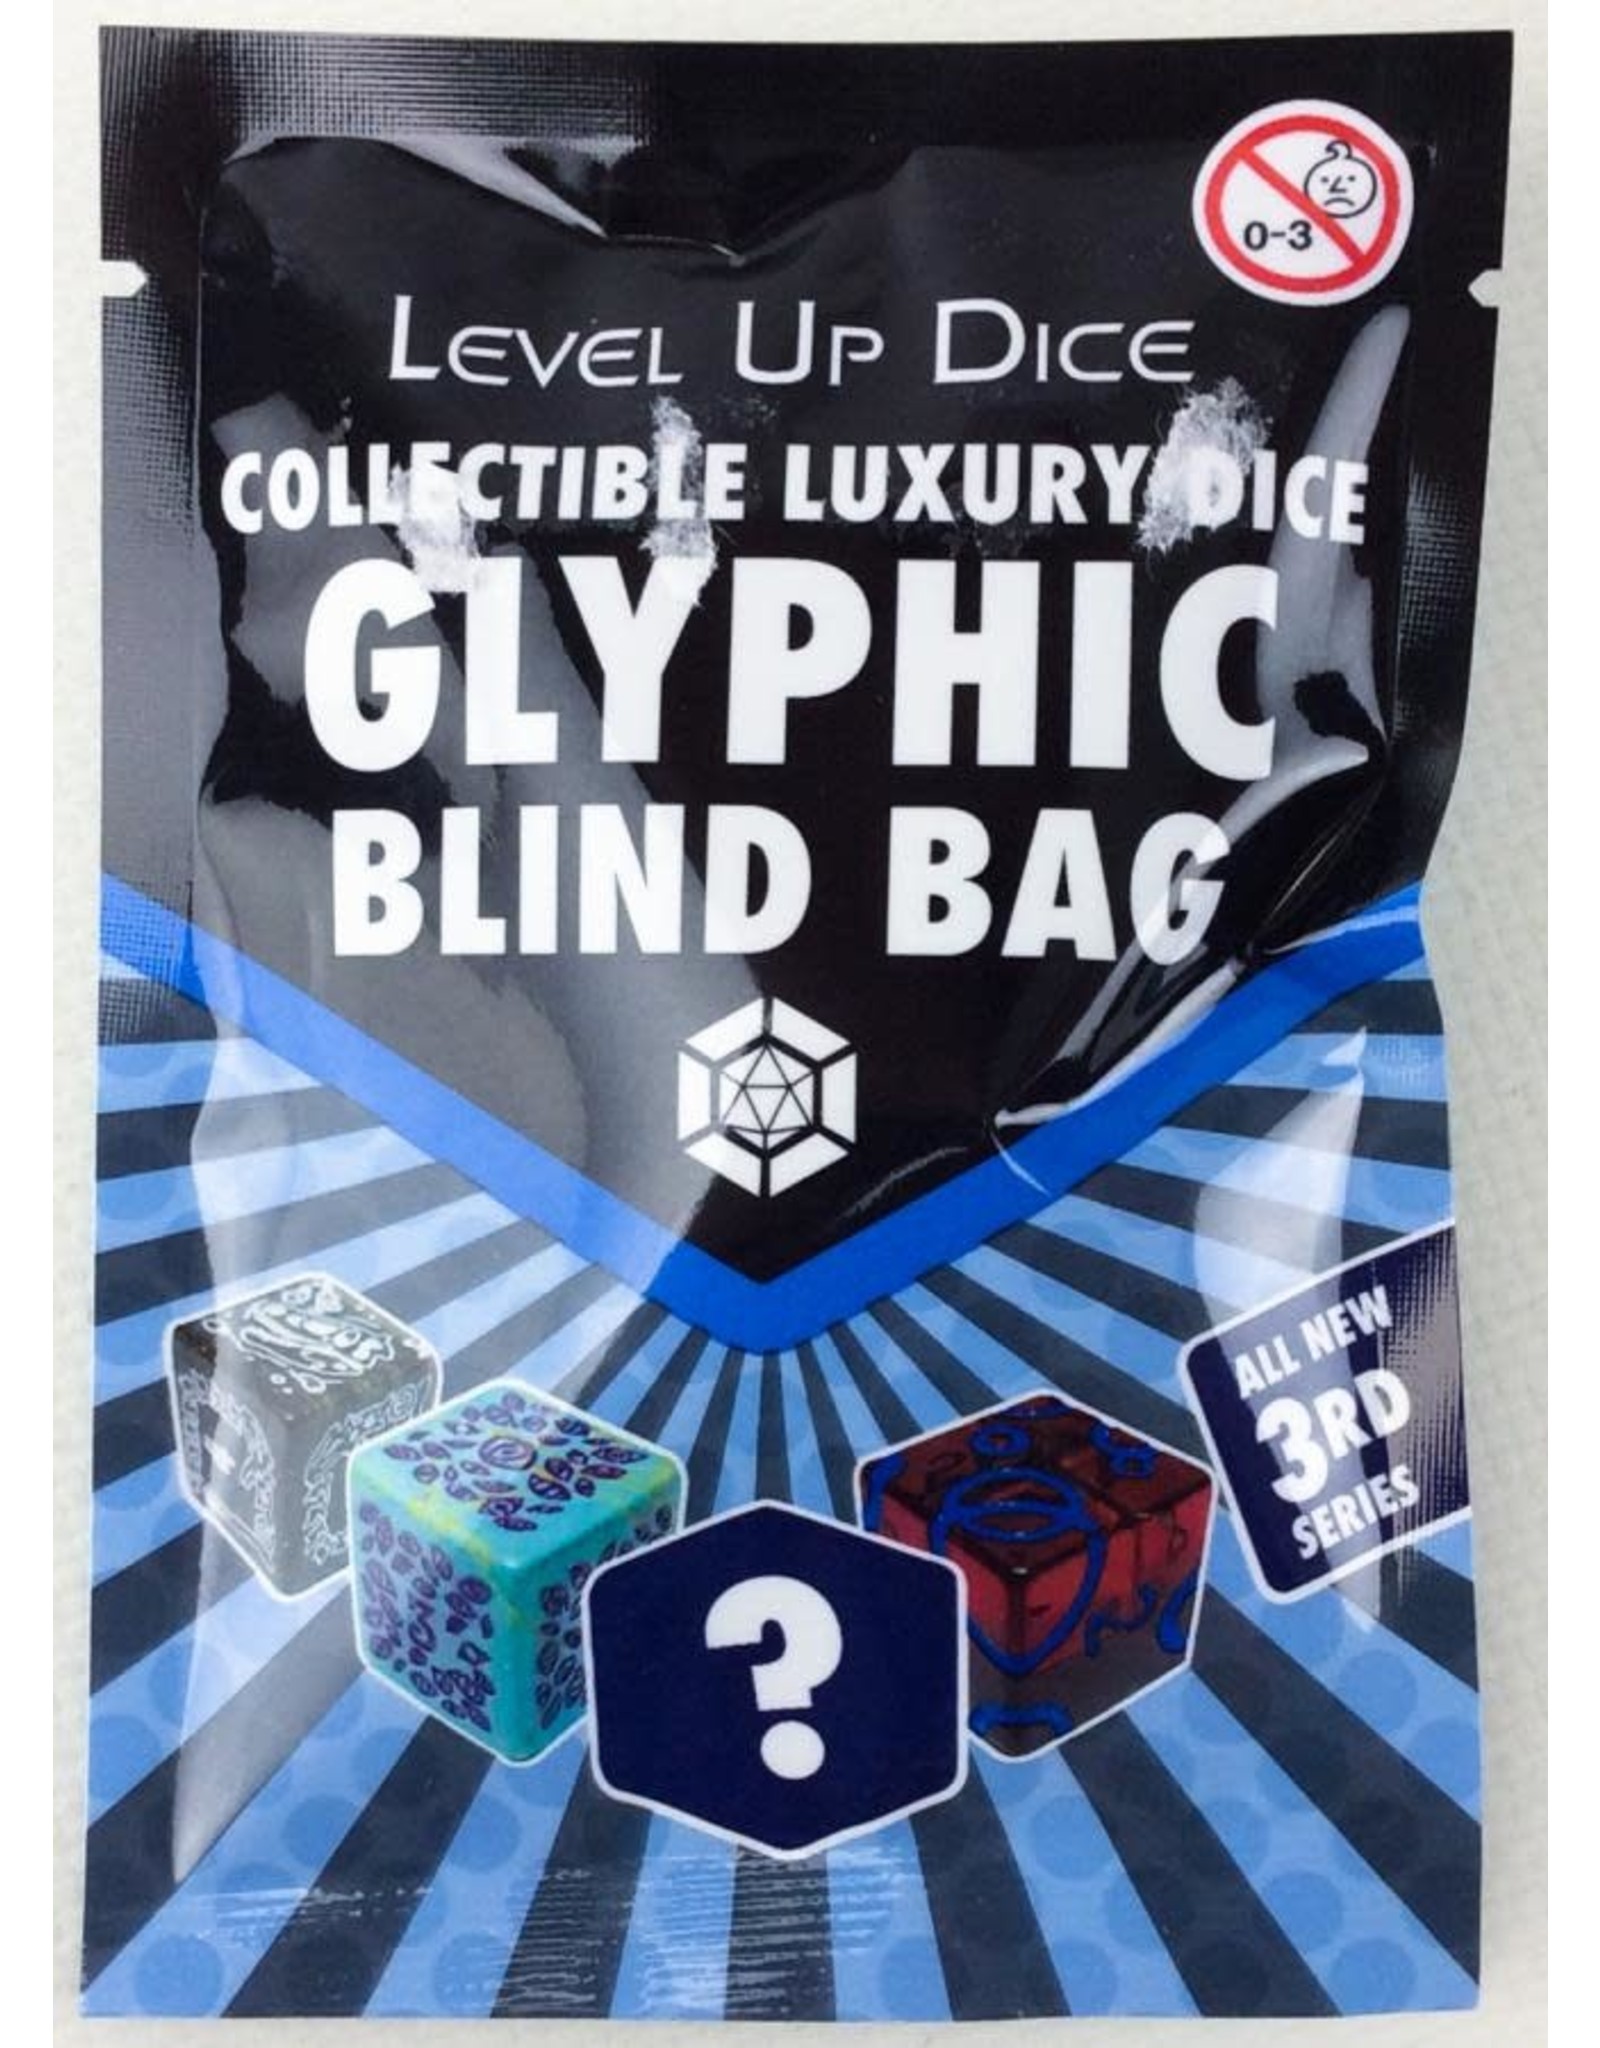 Gemstone Dice - Glyphic Blind Bag Series 3 Single D6